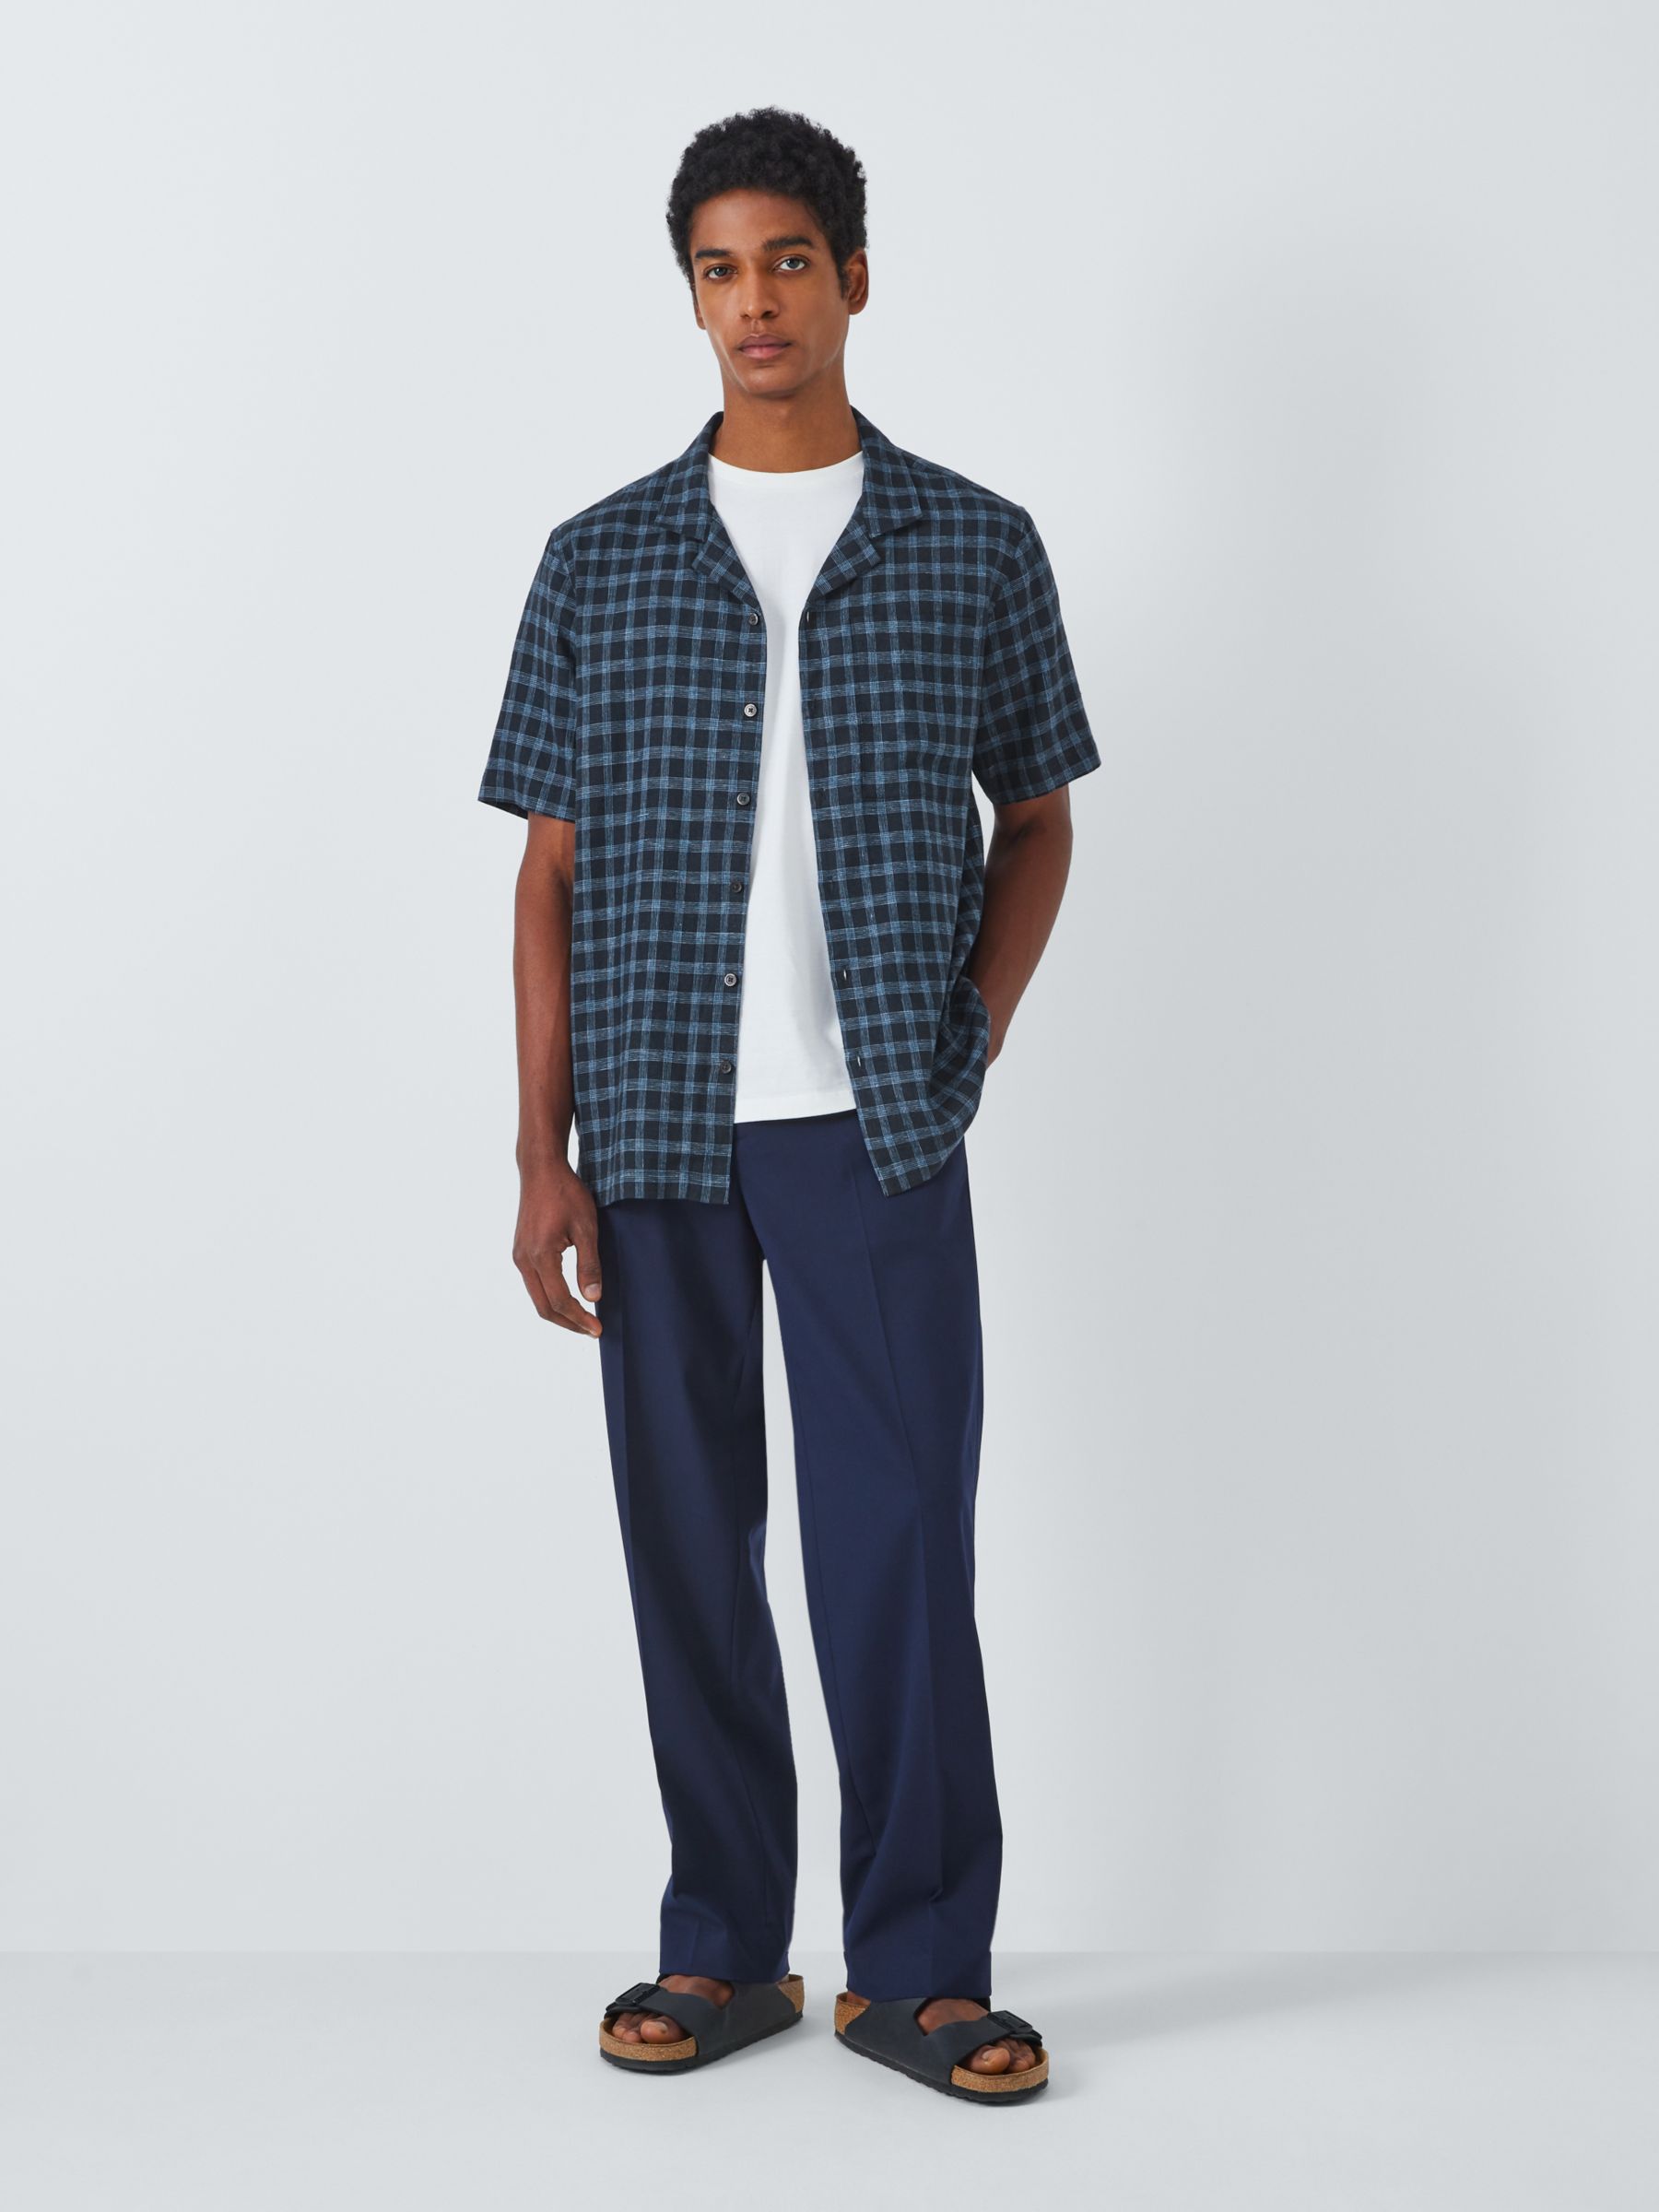 Kin Linen Blend Short Sleeve Check Revere Collar Shirt, Navy, M